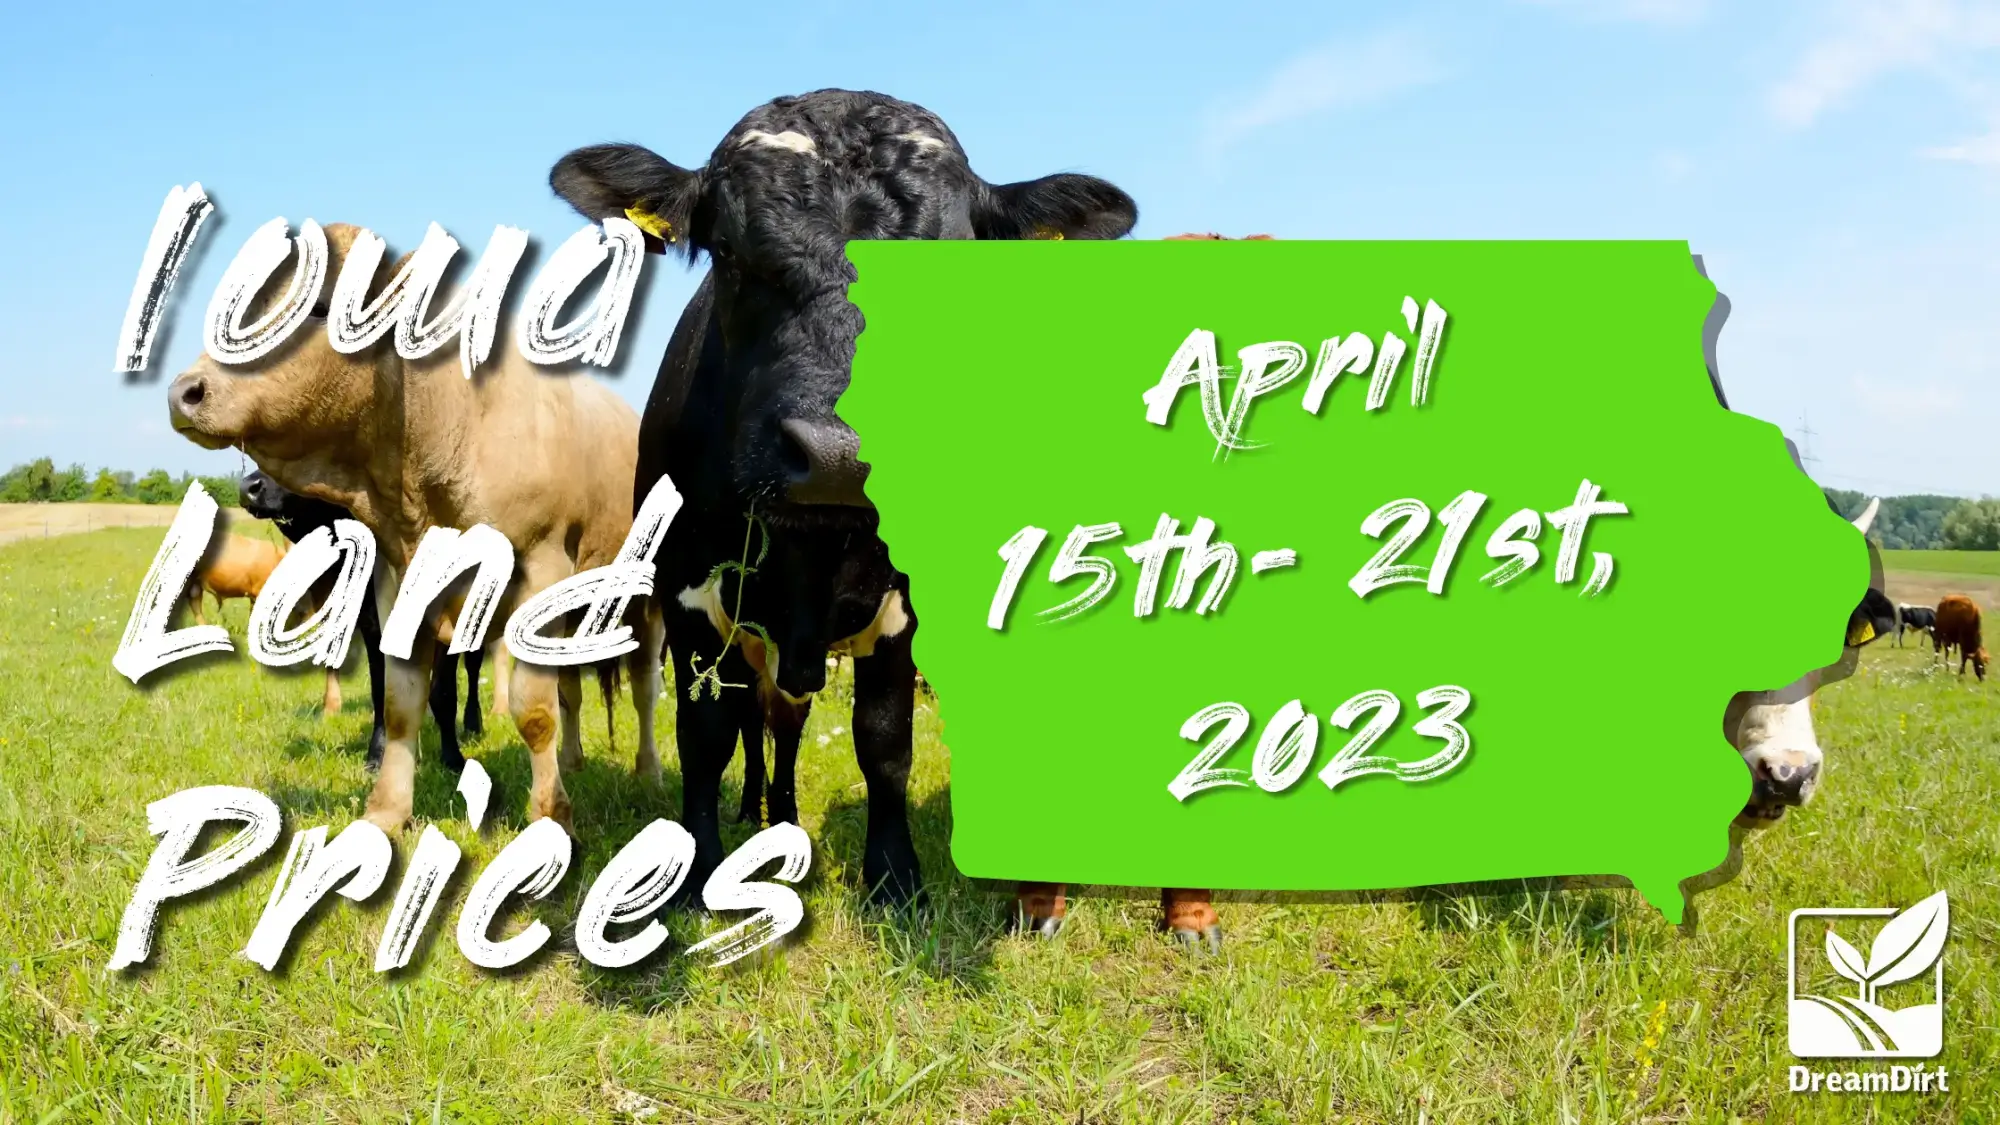 Iowa Farmland Prices April 15th-21st, 2023